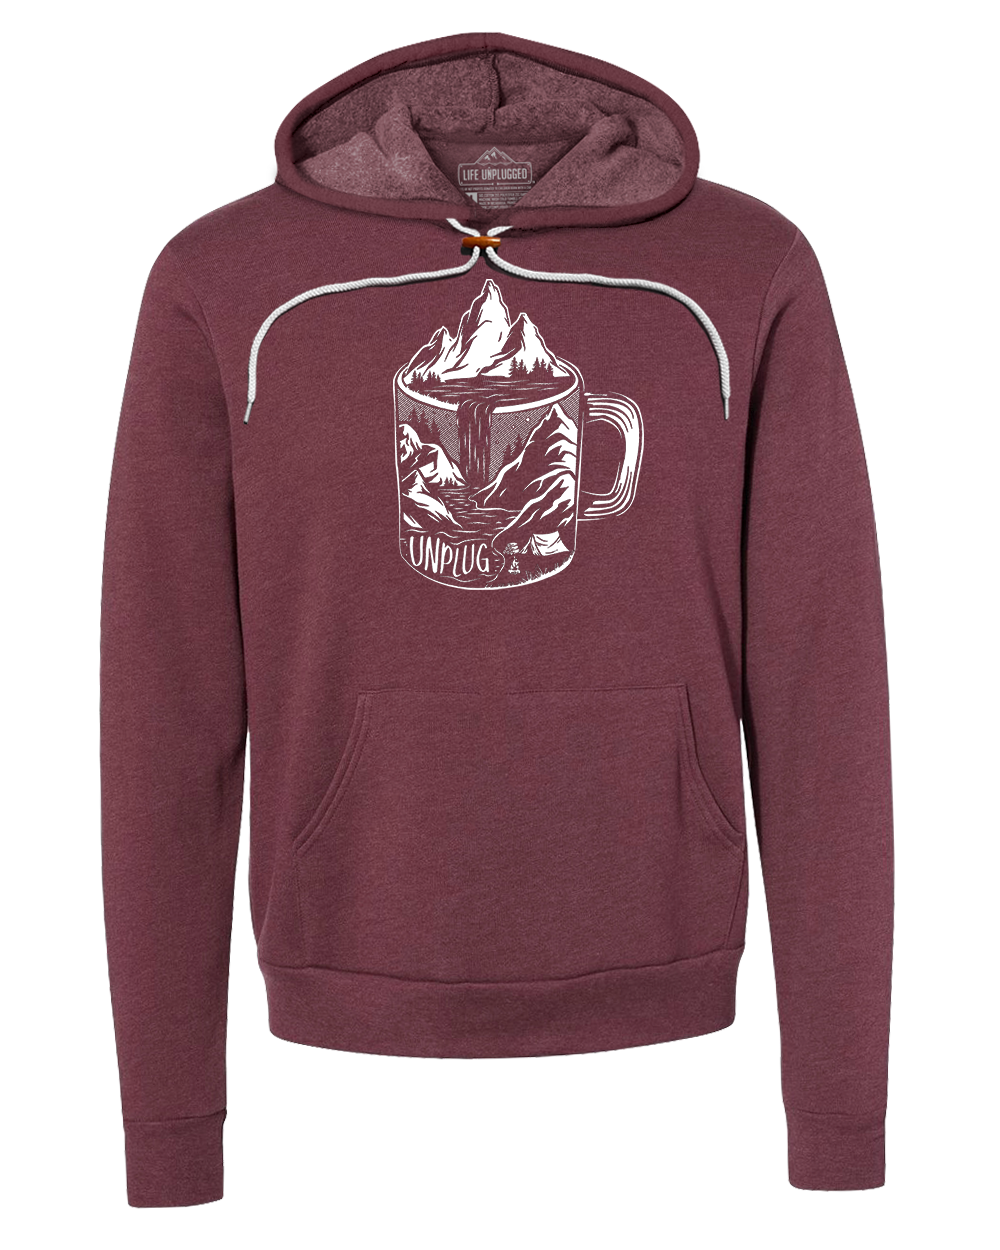 Coffee Mountain Scene Premium Super Soft Hooded Sweatshirt - Life Unplugged